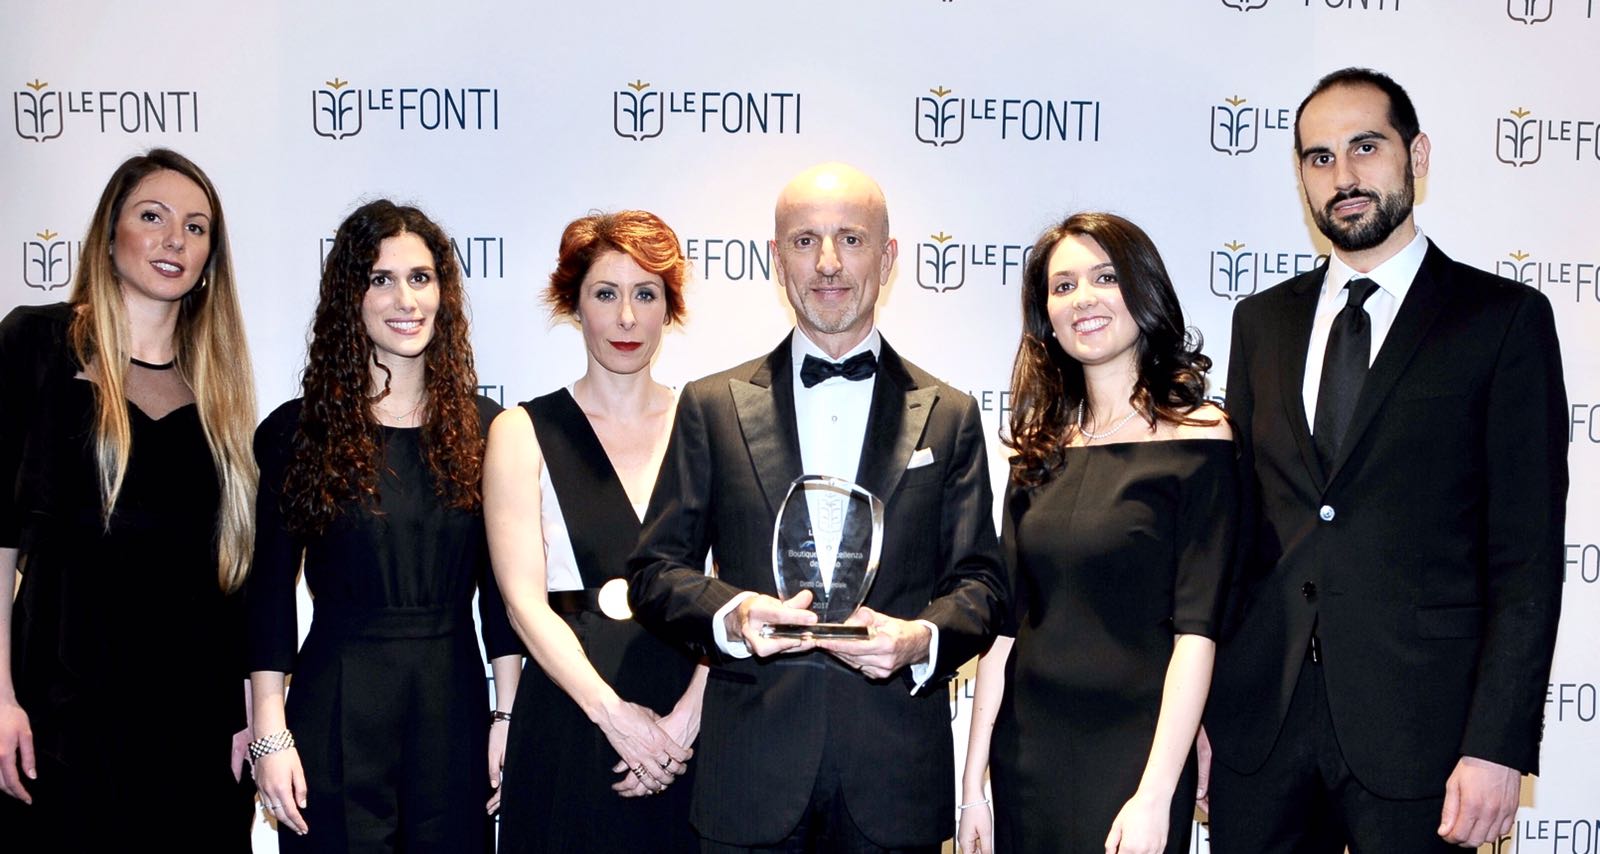 La boutique legale Donativi & Associat vince il premio "Le Fonti Awards 2017"